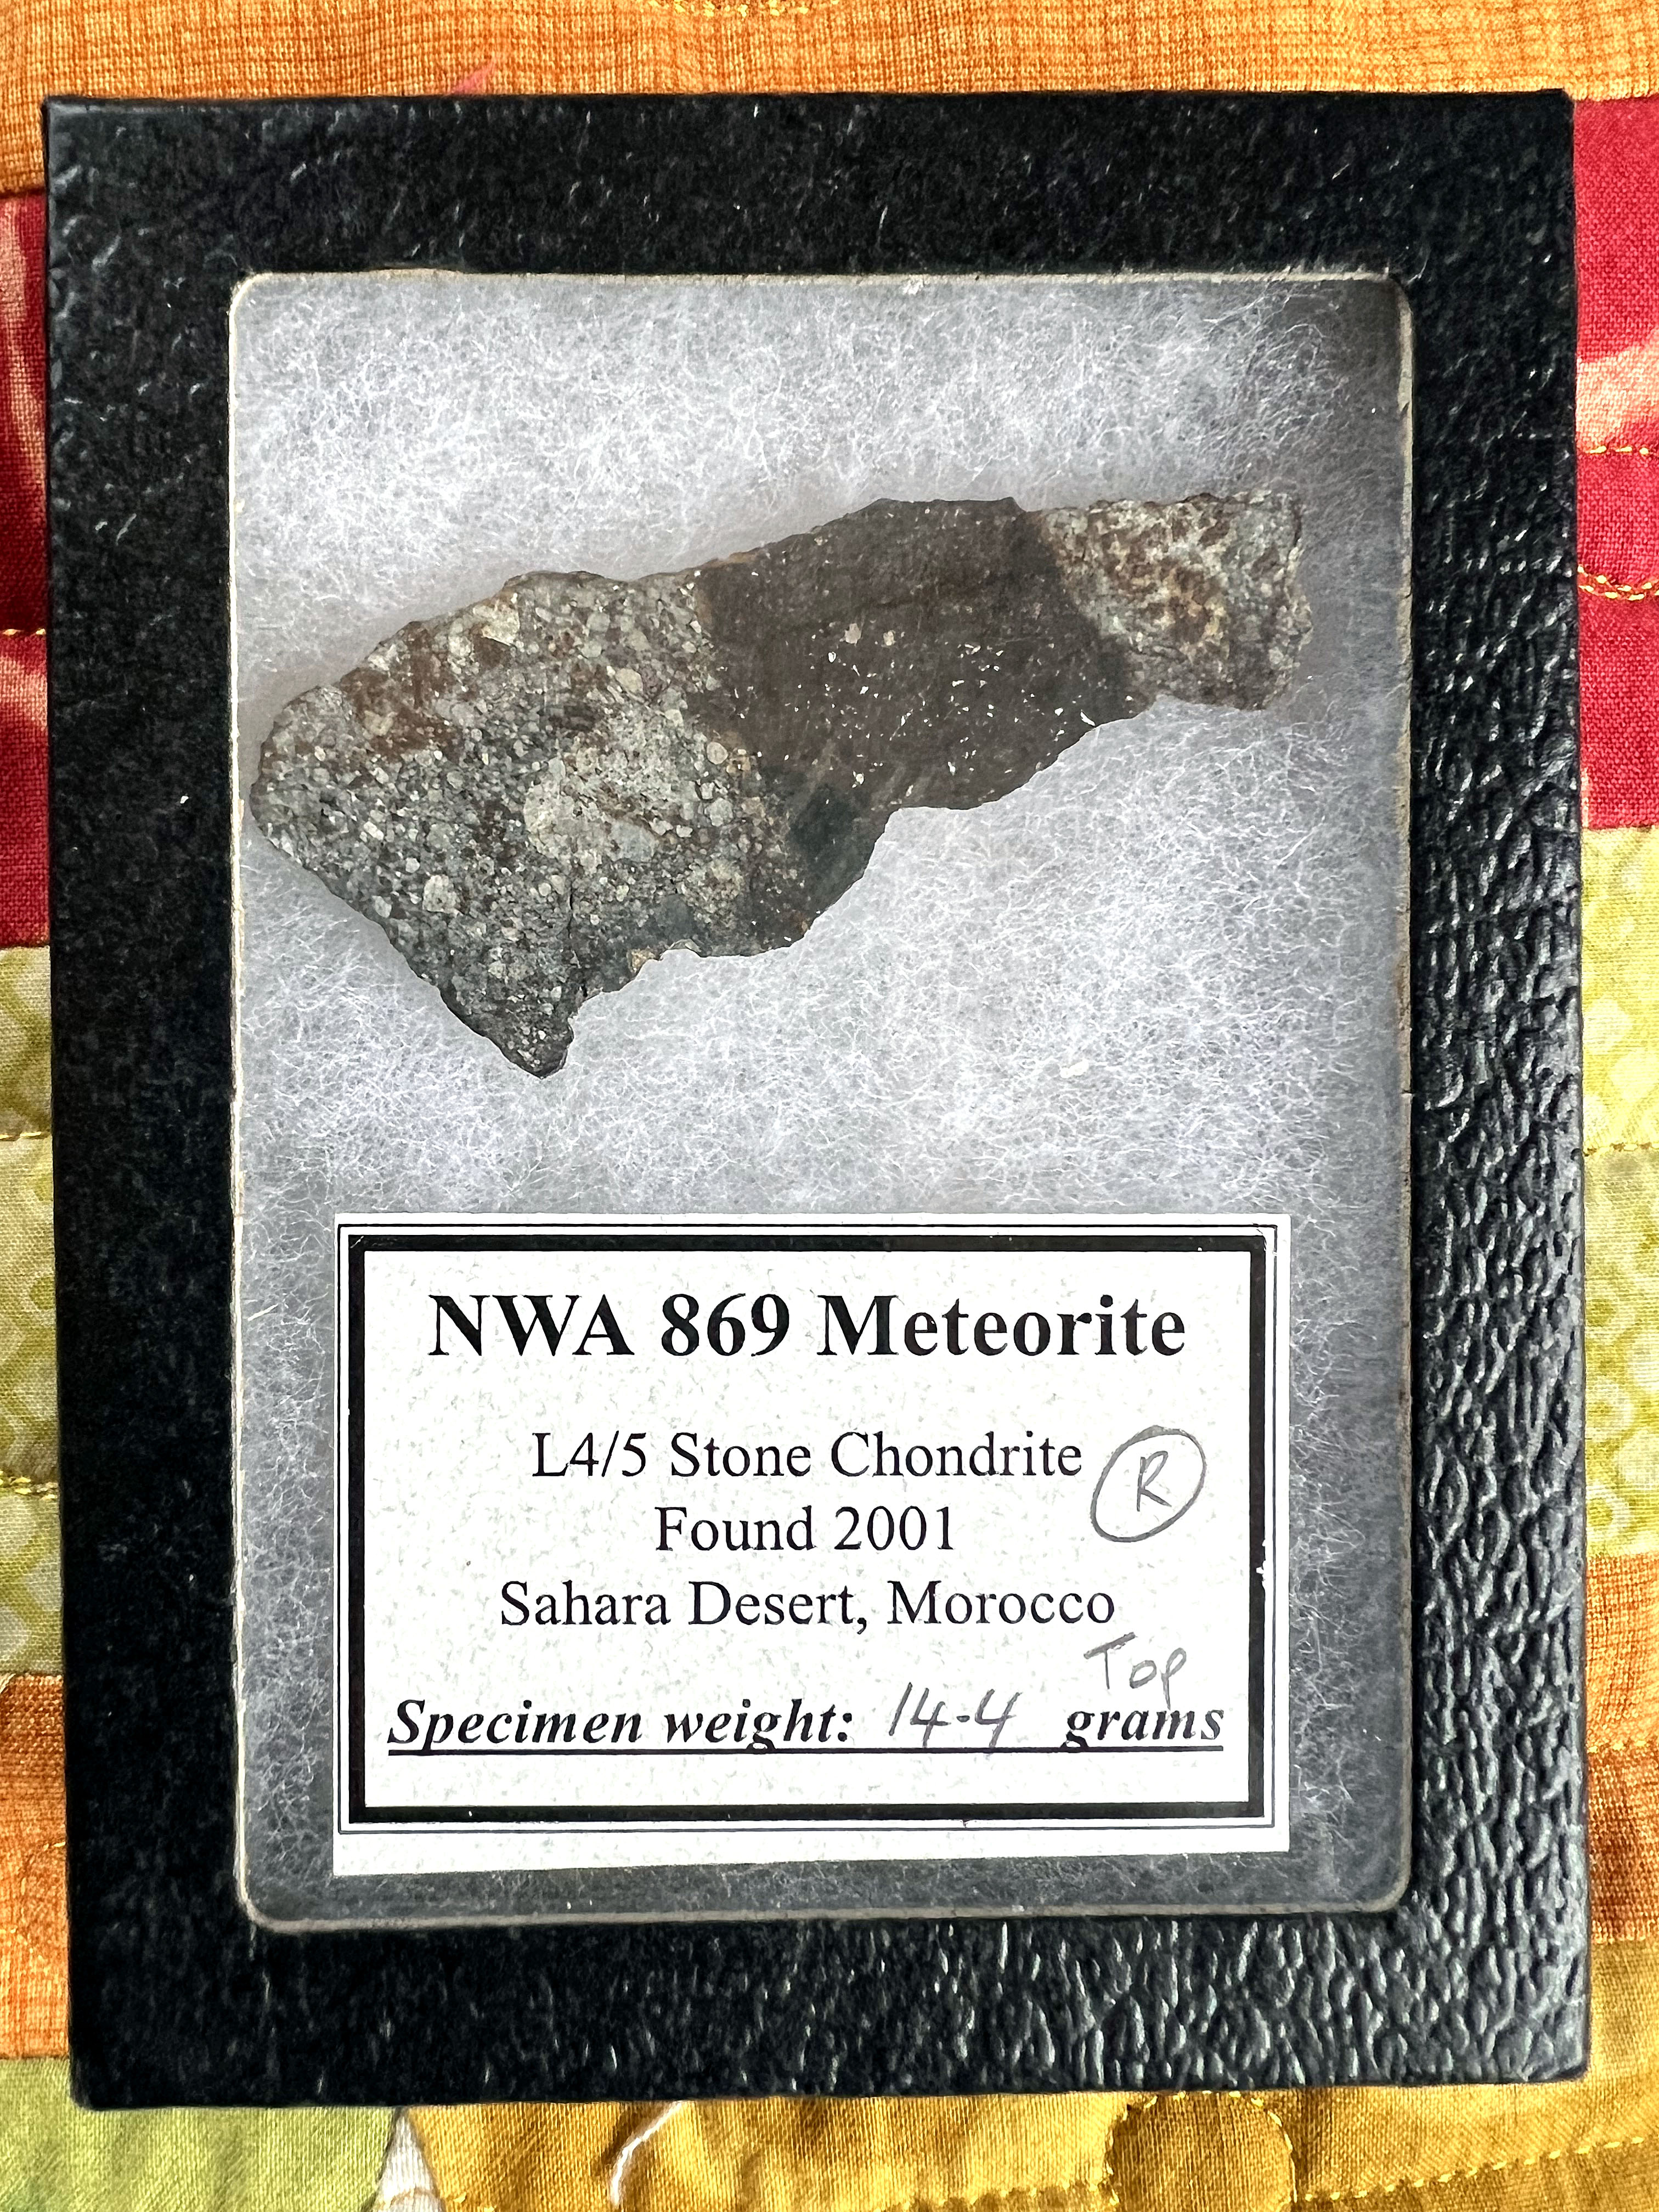 Second place raffle prize Meteorite